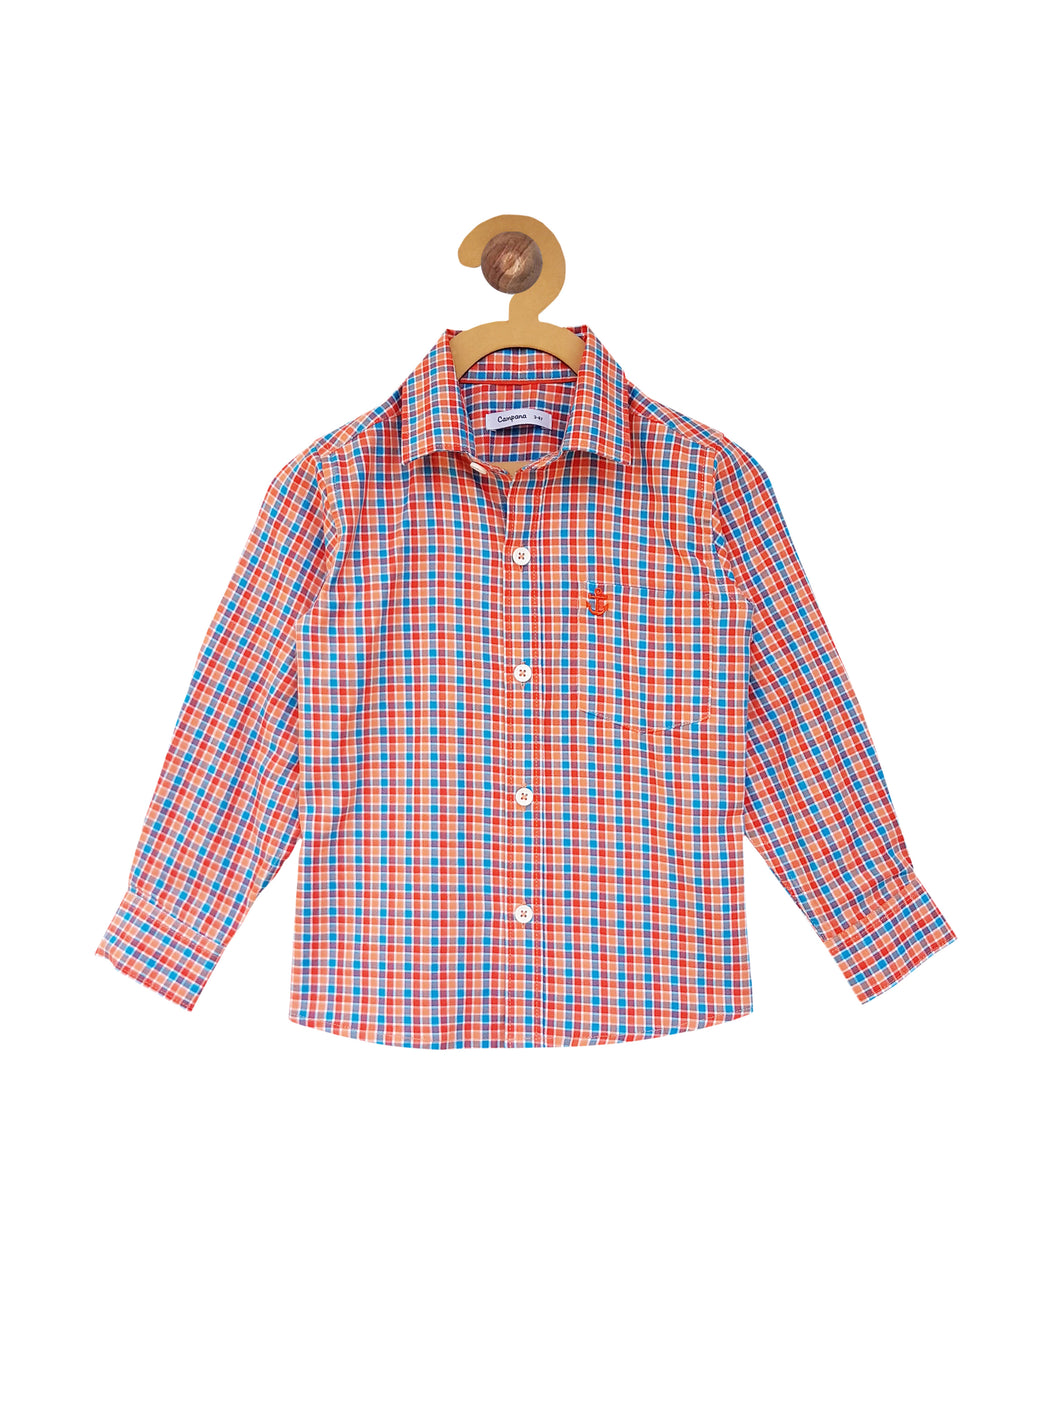 Campana Boys Full-Sleeves Check Shirt - Orange & Blue (CK13218)